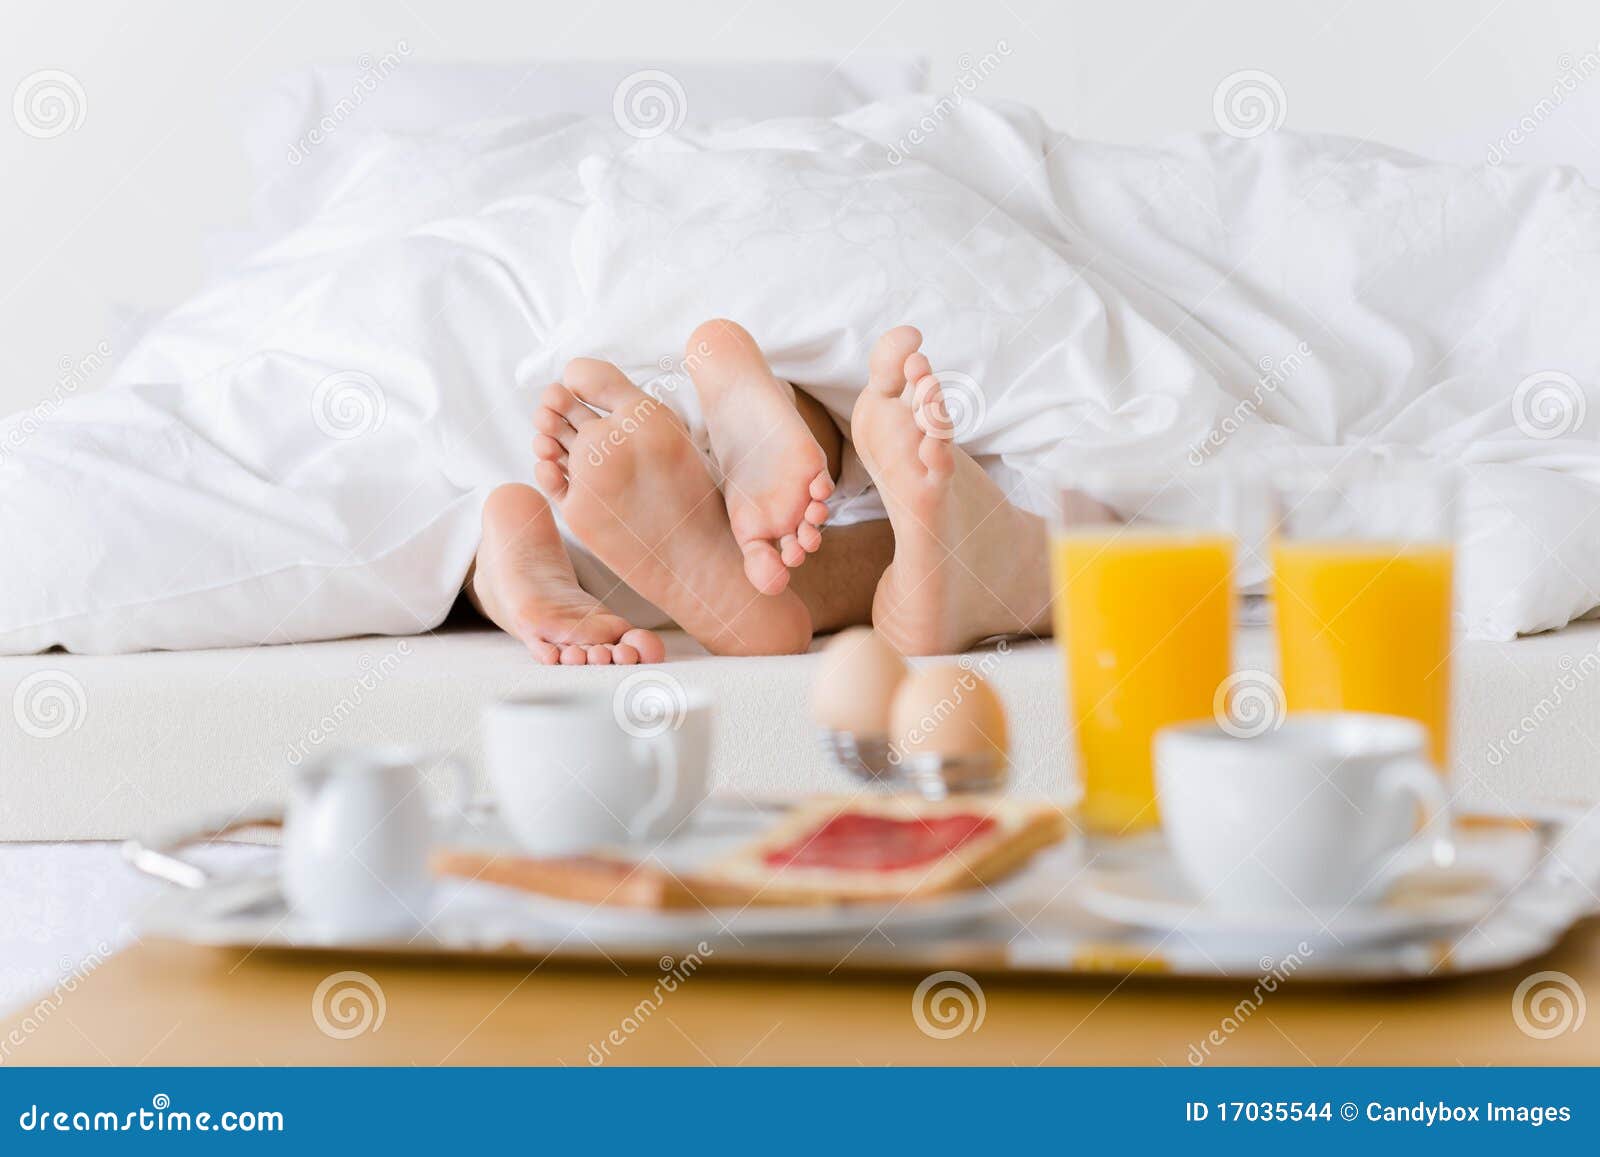 luxury hotel honeymoon breakfast - couple in bed